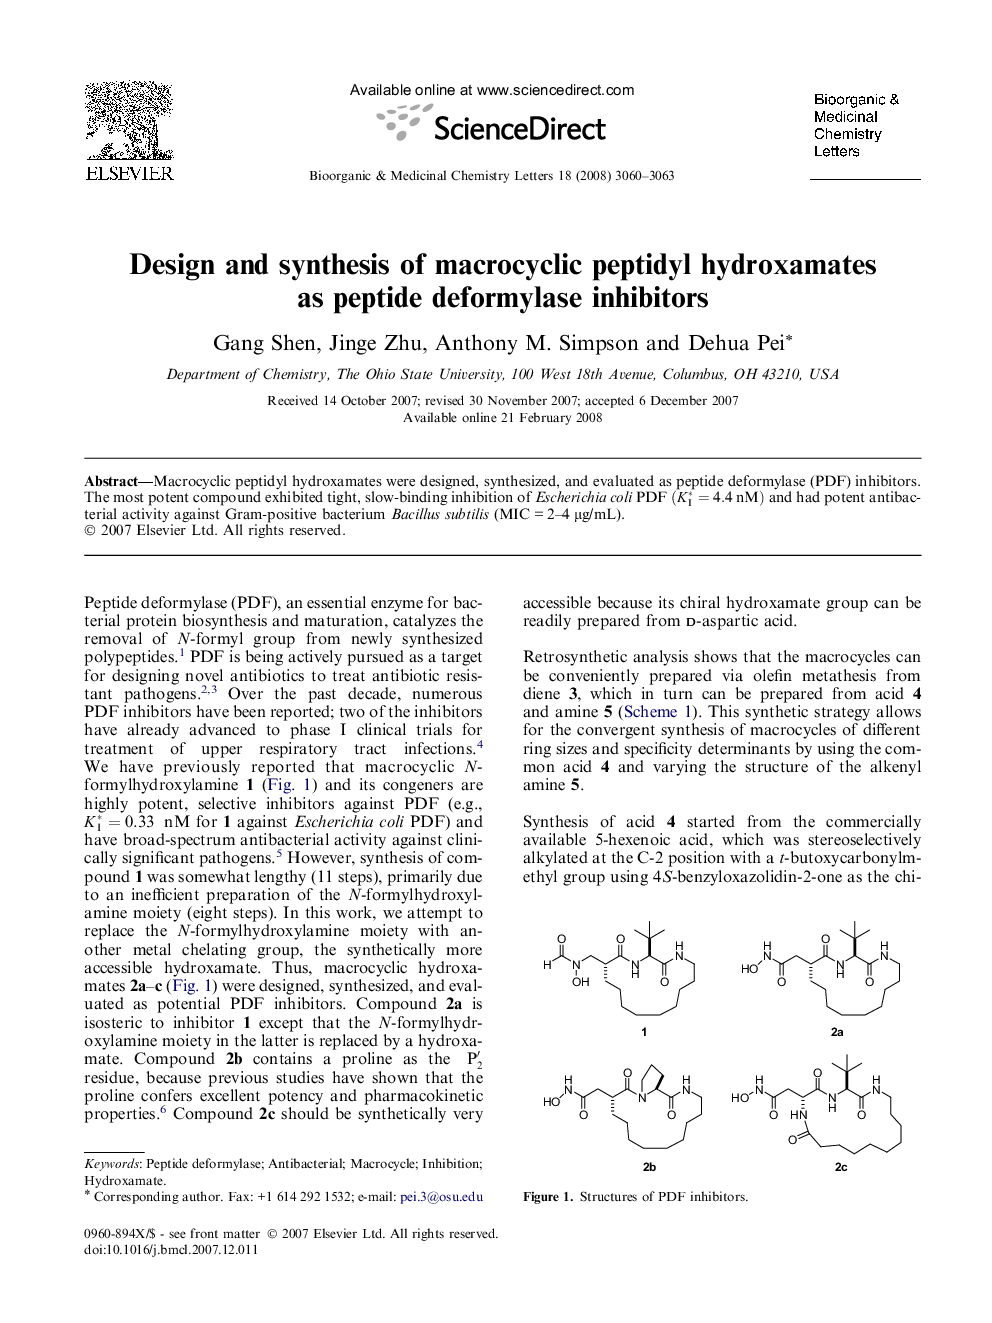 Design and synthesis of macrocyclic peptidyl hydroxamates as peptide deformylase inhibitors